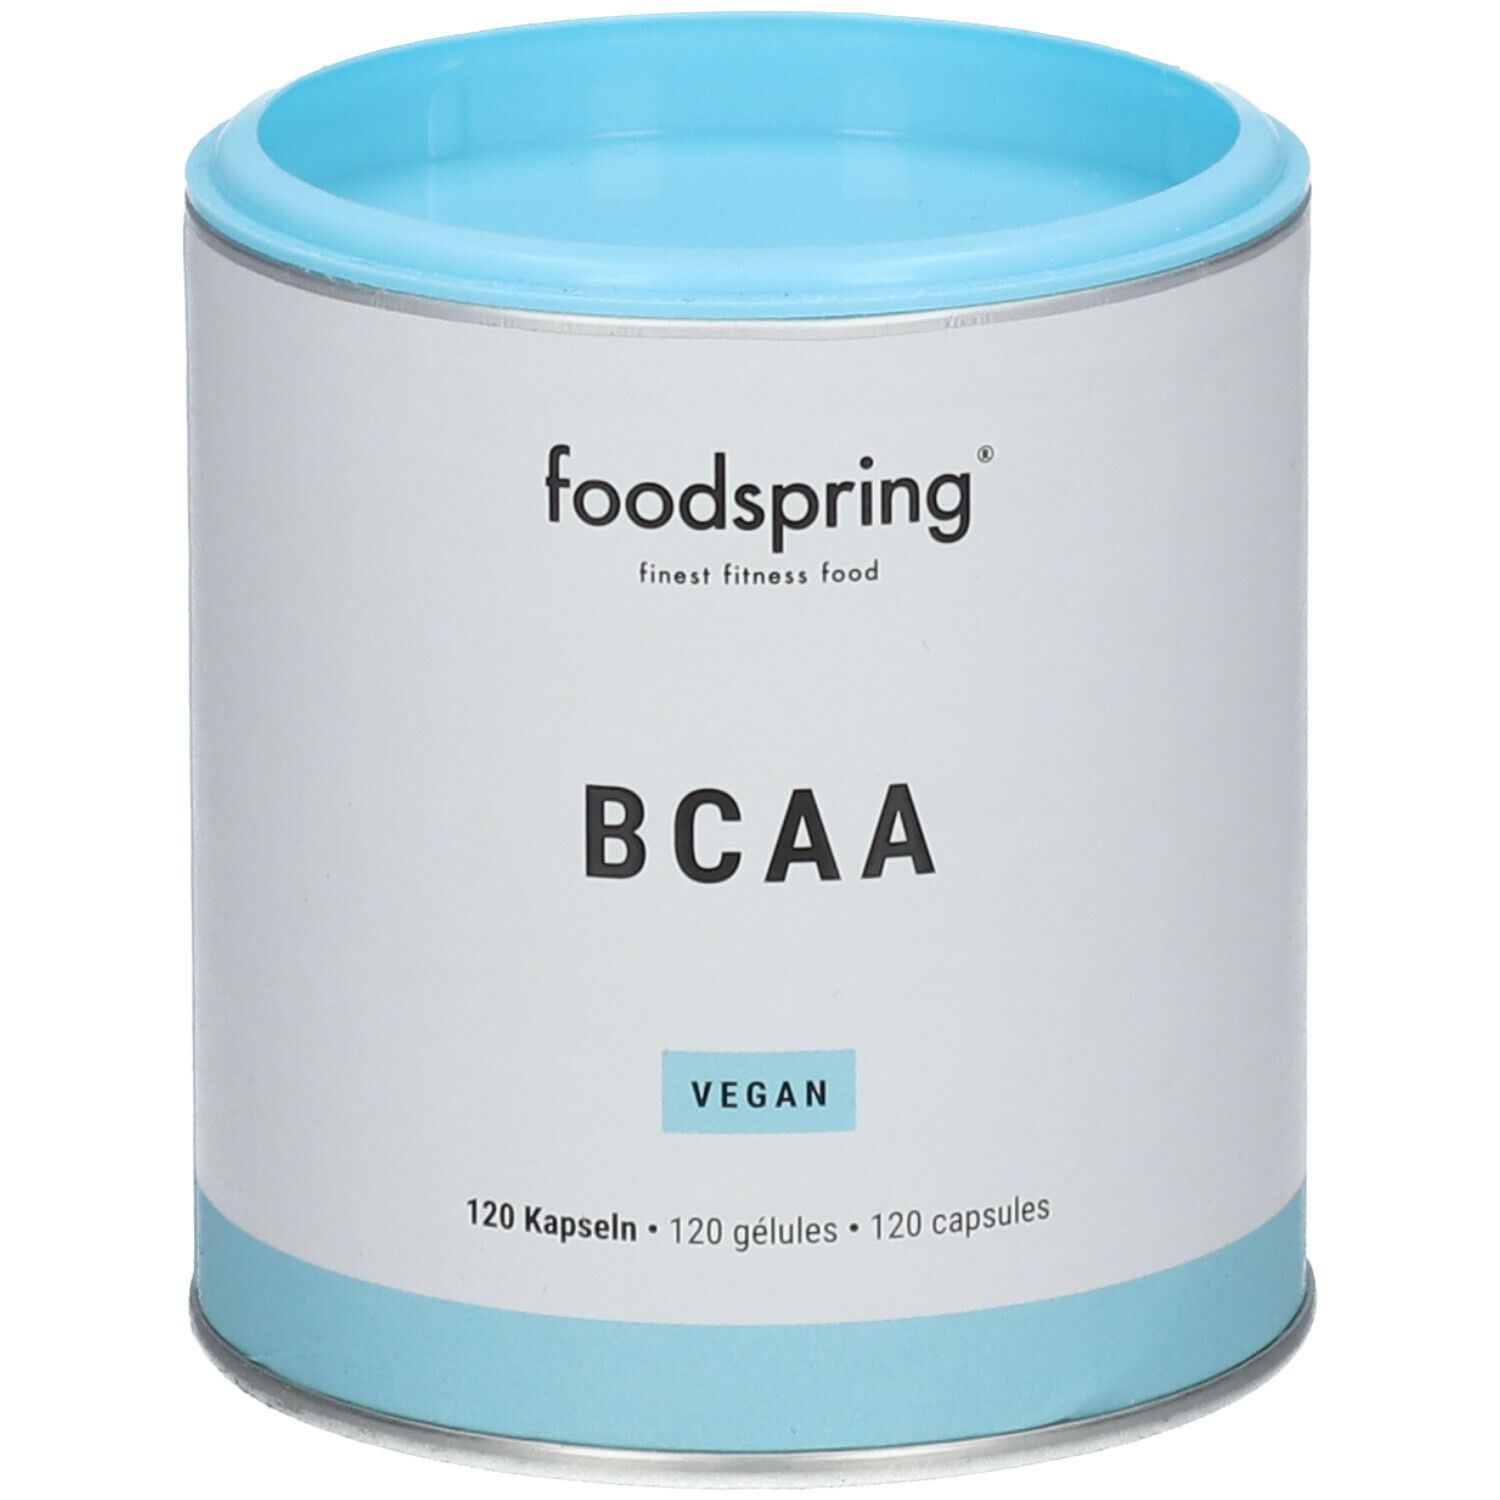 foodspring® BCAA Kapseln